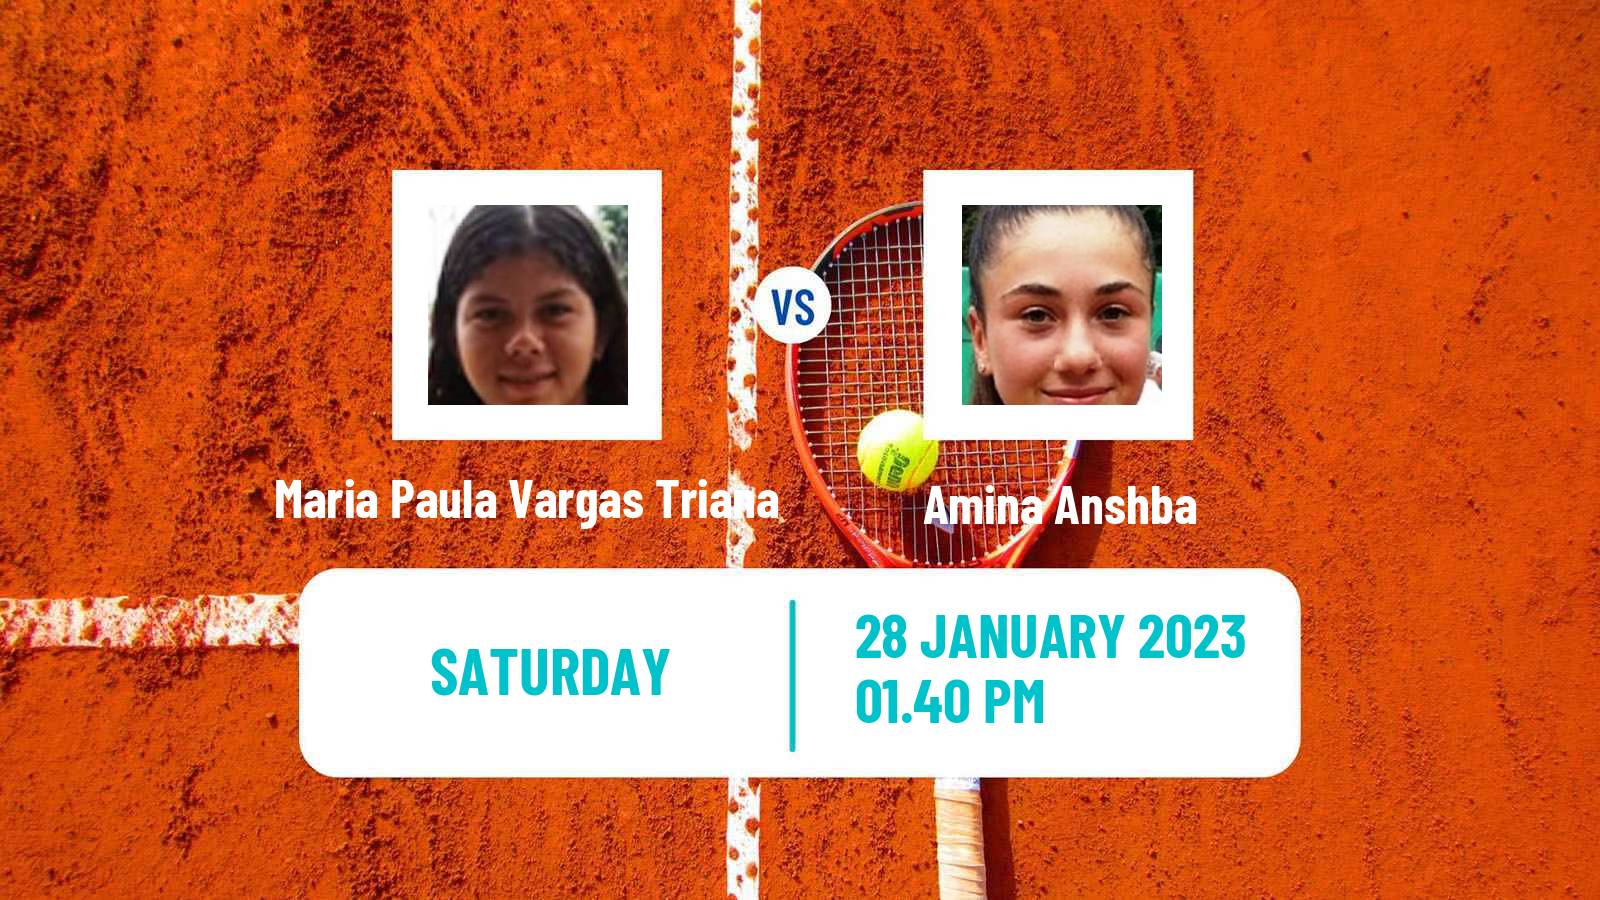 Tennis ATP Challenger Maria Paula Vargas Triana - Amina Anshba